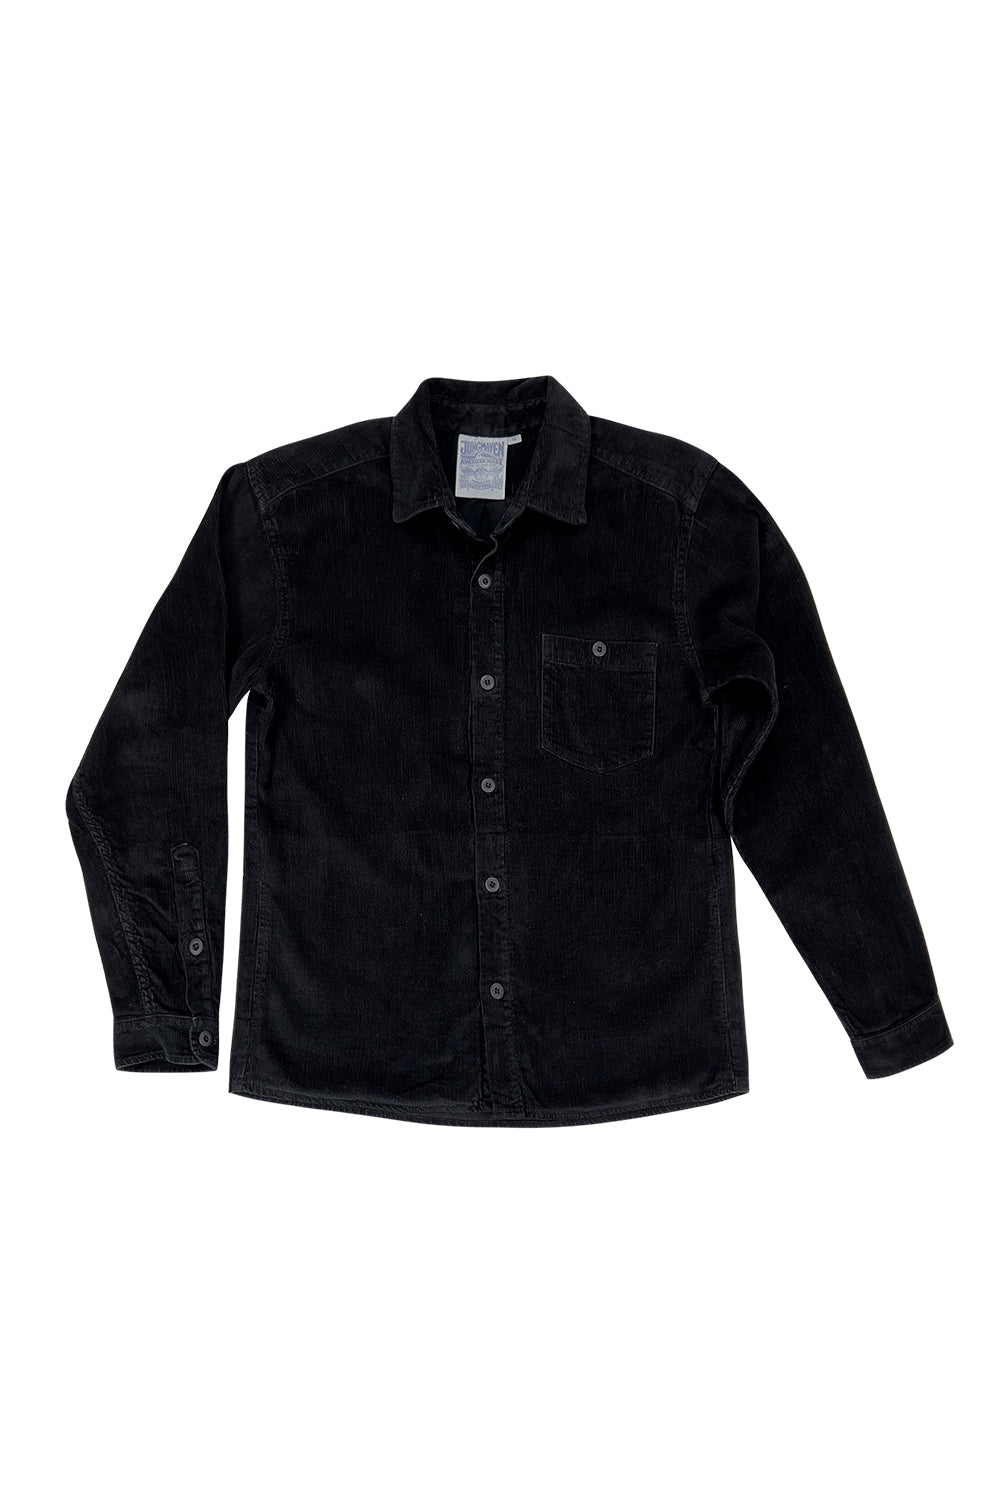 Oxnard Shirt Jacket | Jungmaven Hemp Clothing & Accessories Color: Black